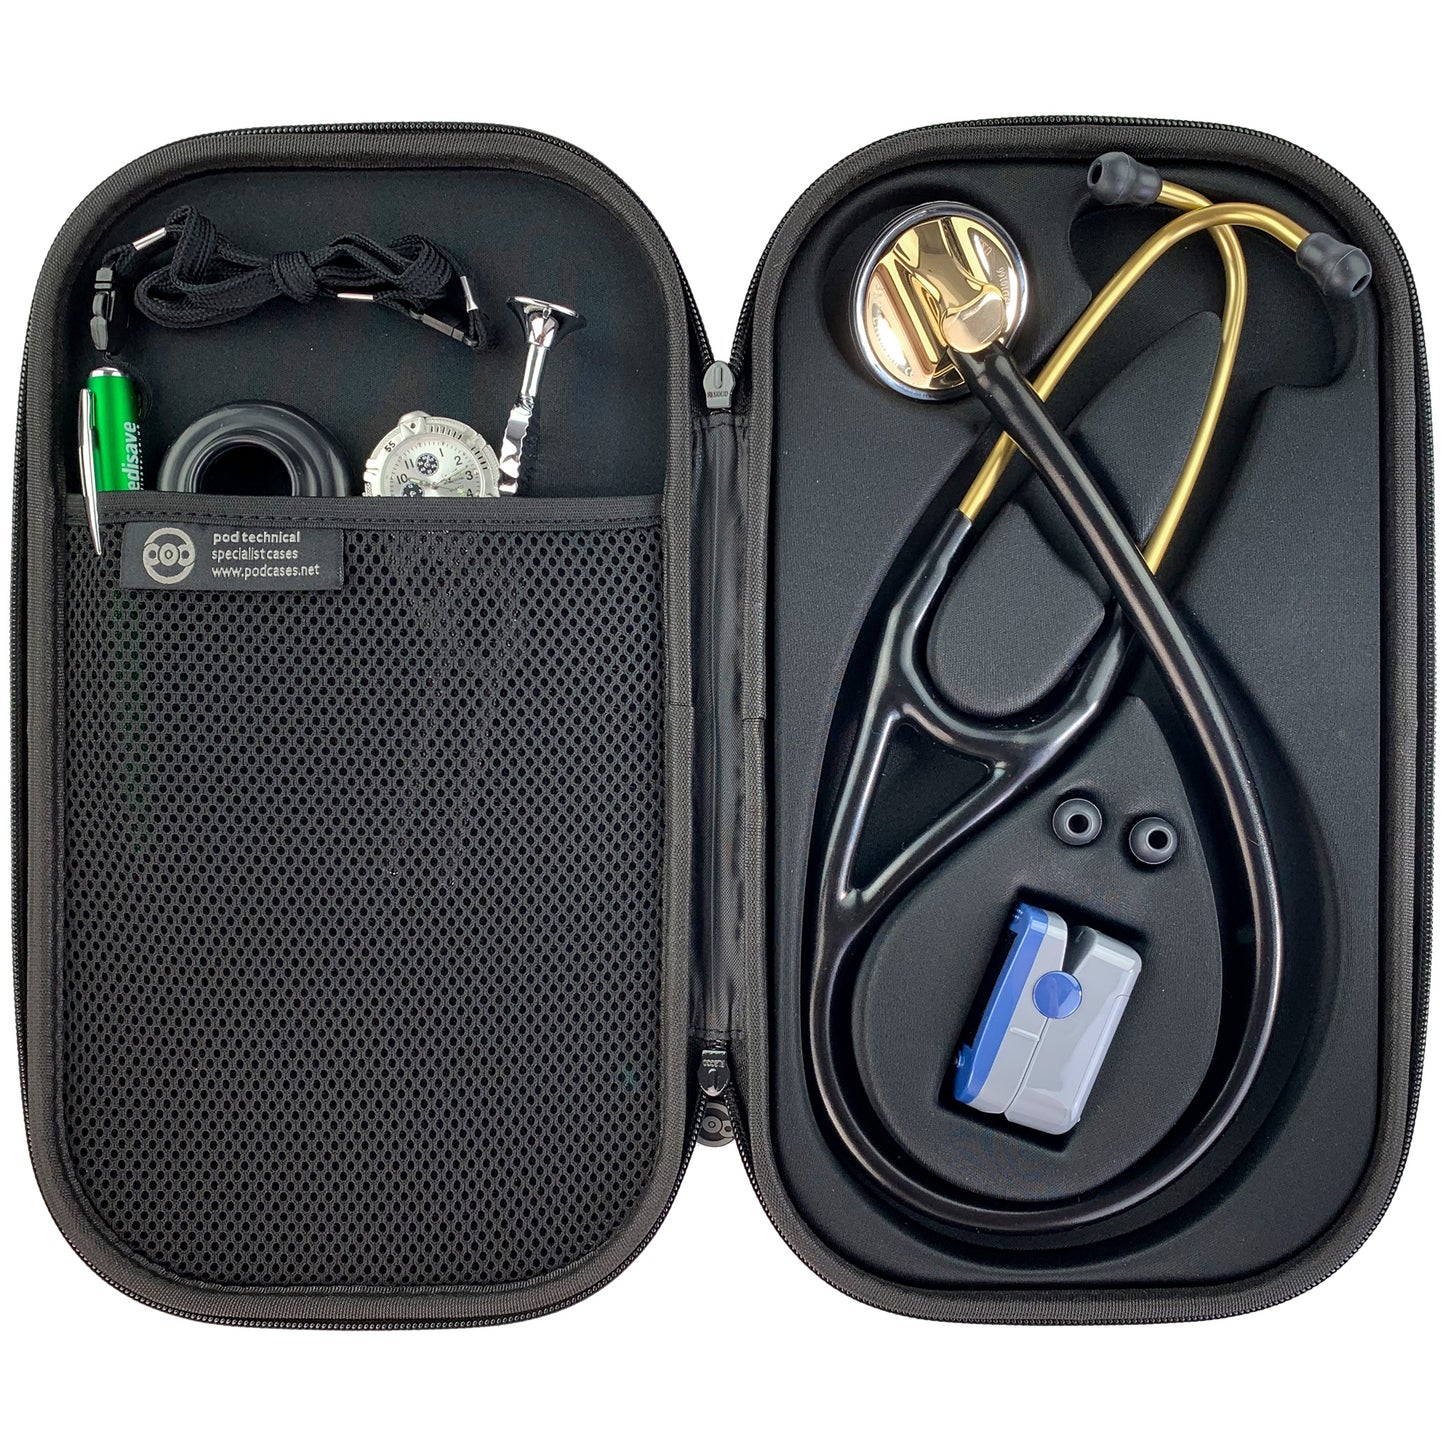 Pod Technical Cardiopod II Stethoscope Case for all Littmann Stethoscopes - All Black  Pod Technical Specialist Cases   